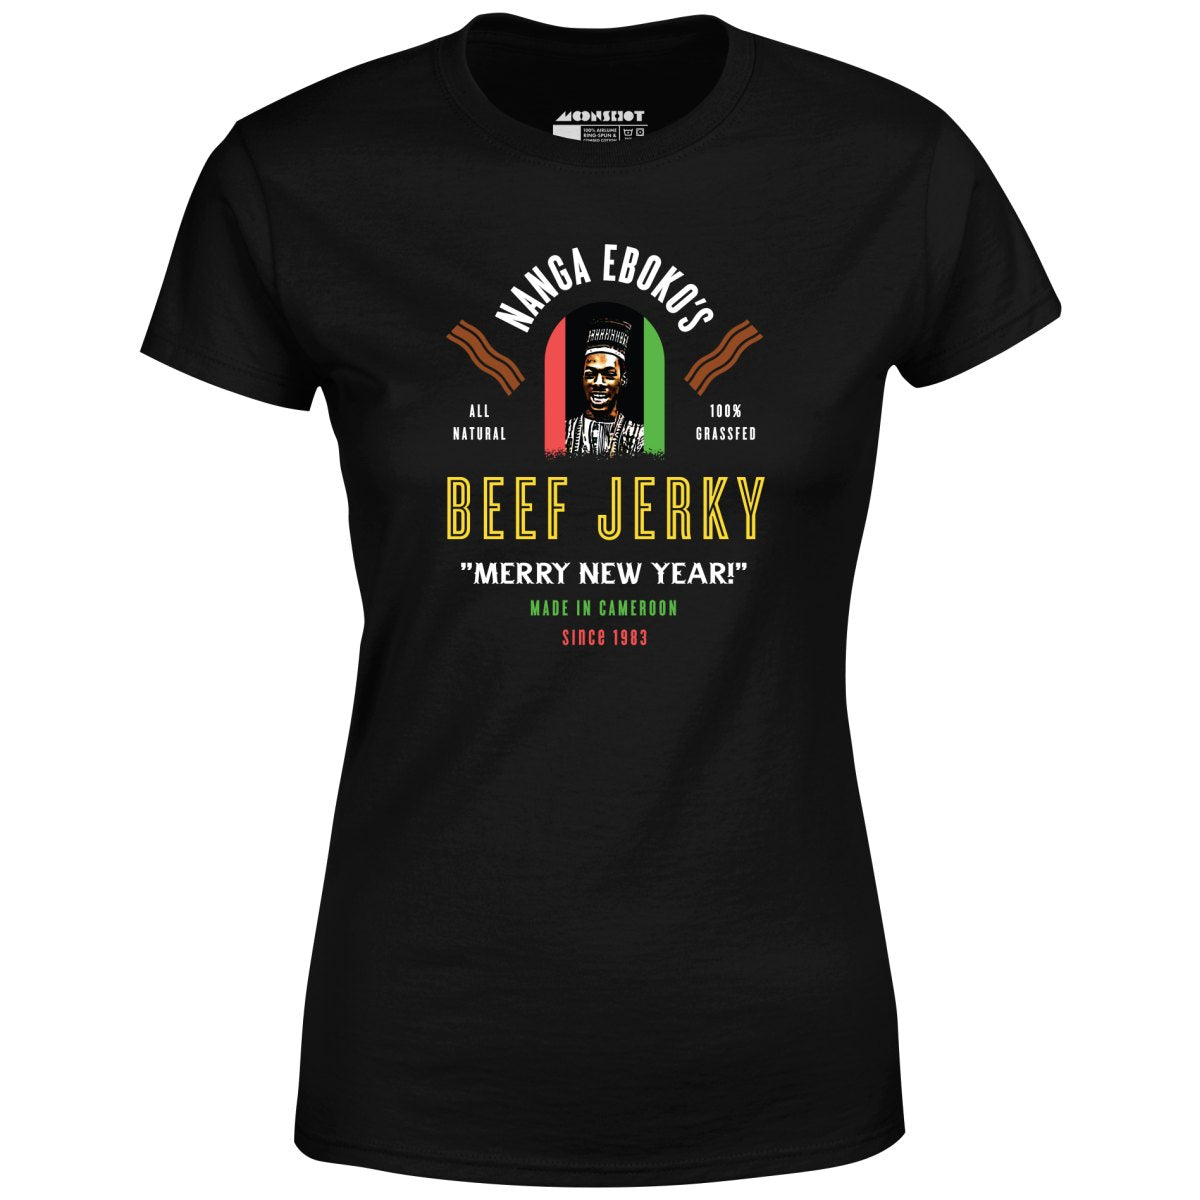 Nanga Eboko's Beef Jerky - Women's T-Shirt